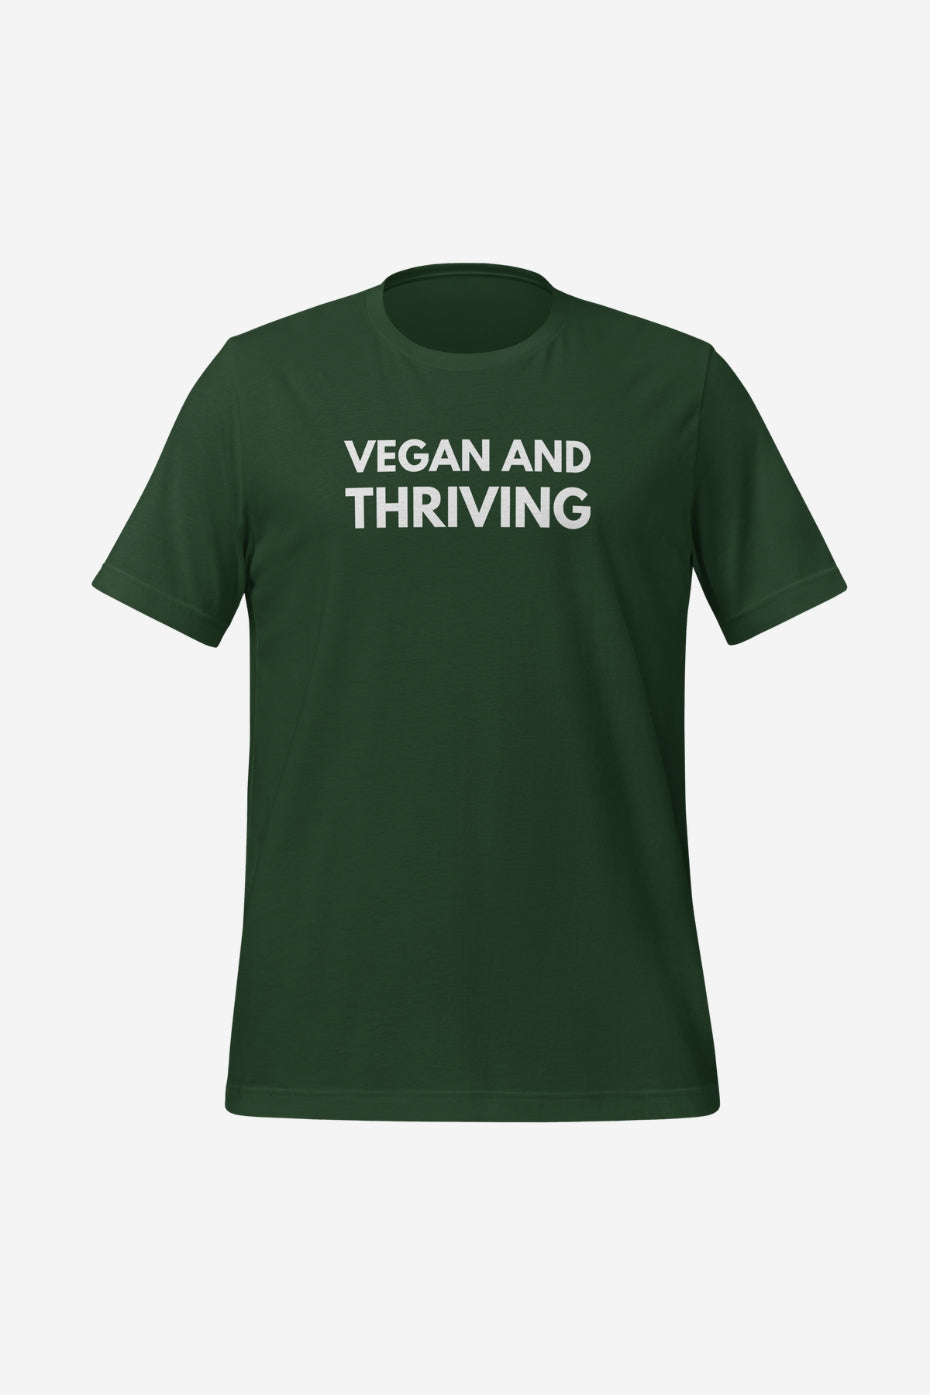 Vegan And Thriving Unisex Vegan T-shirt